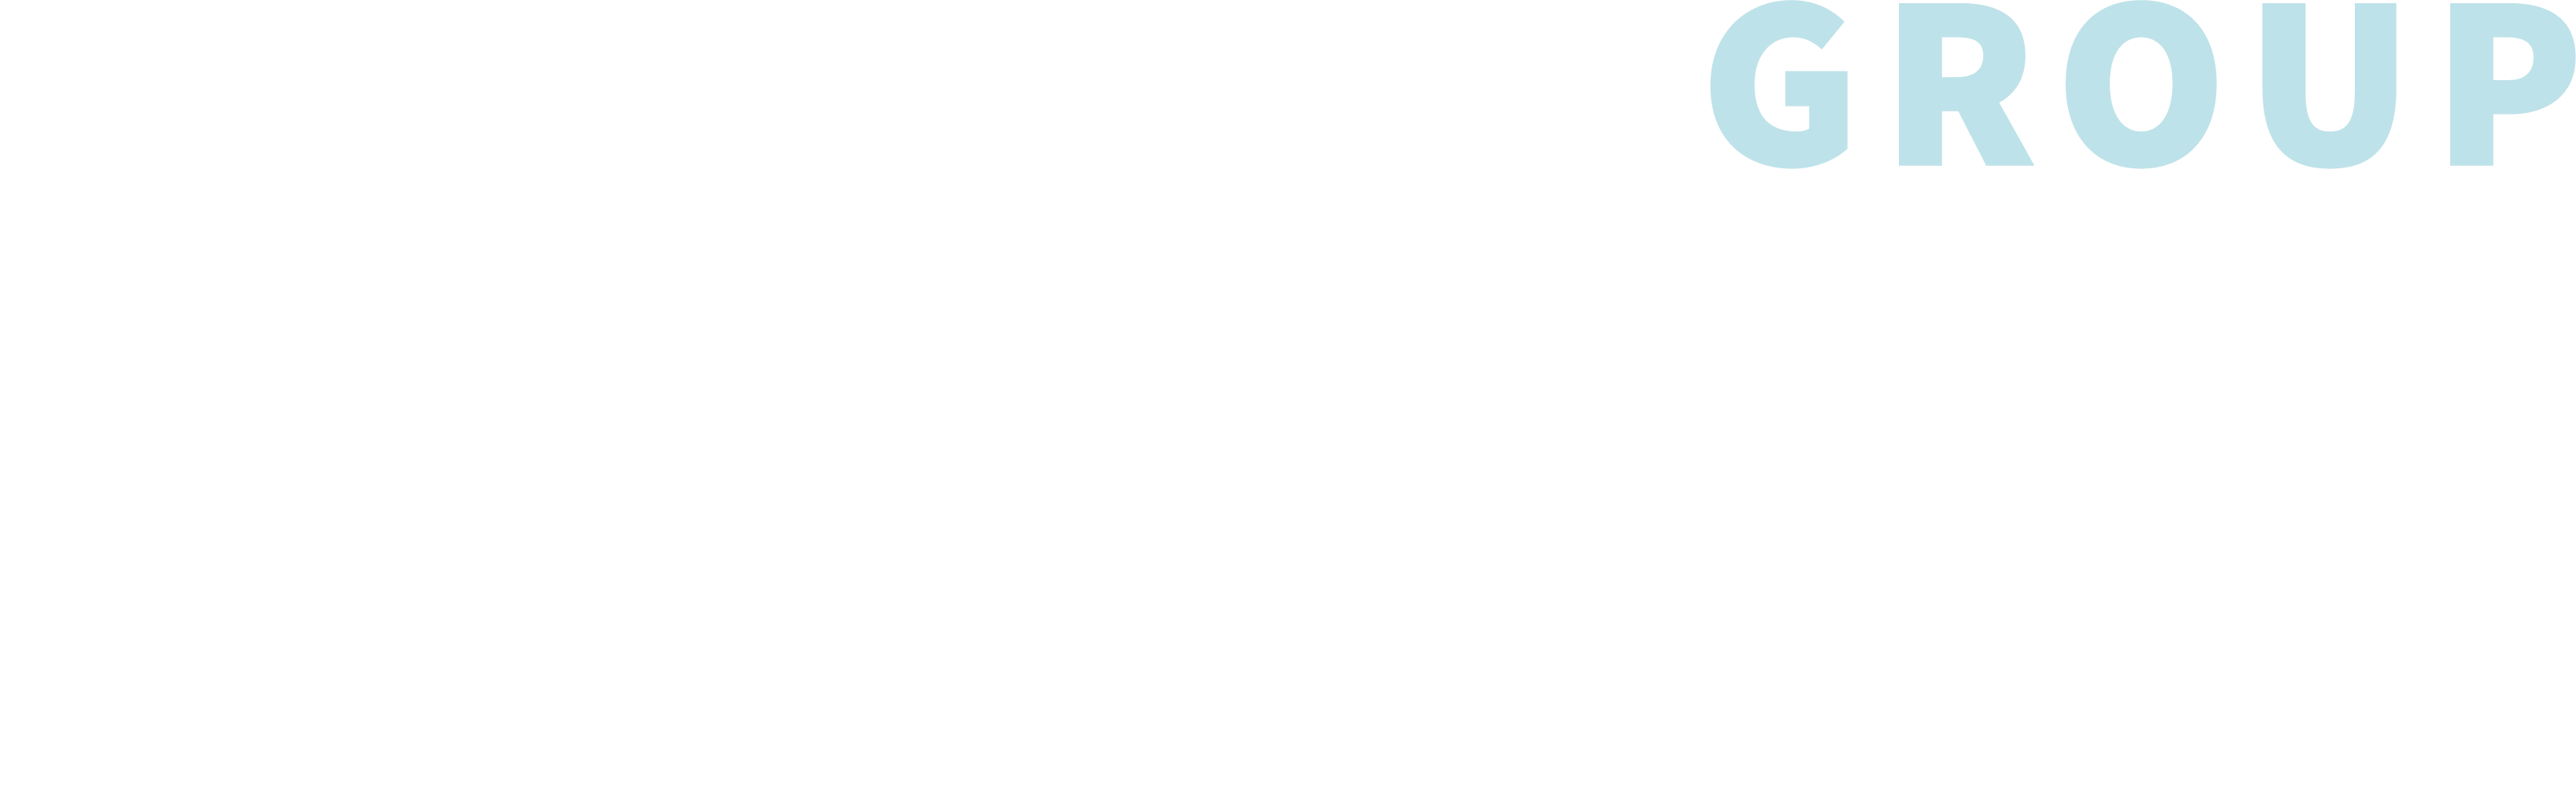 Group Jansen E-mobility